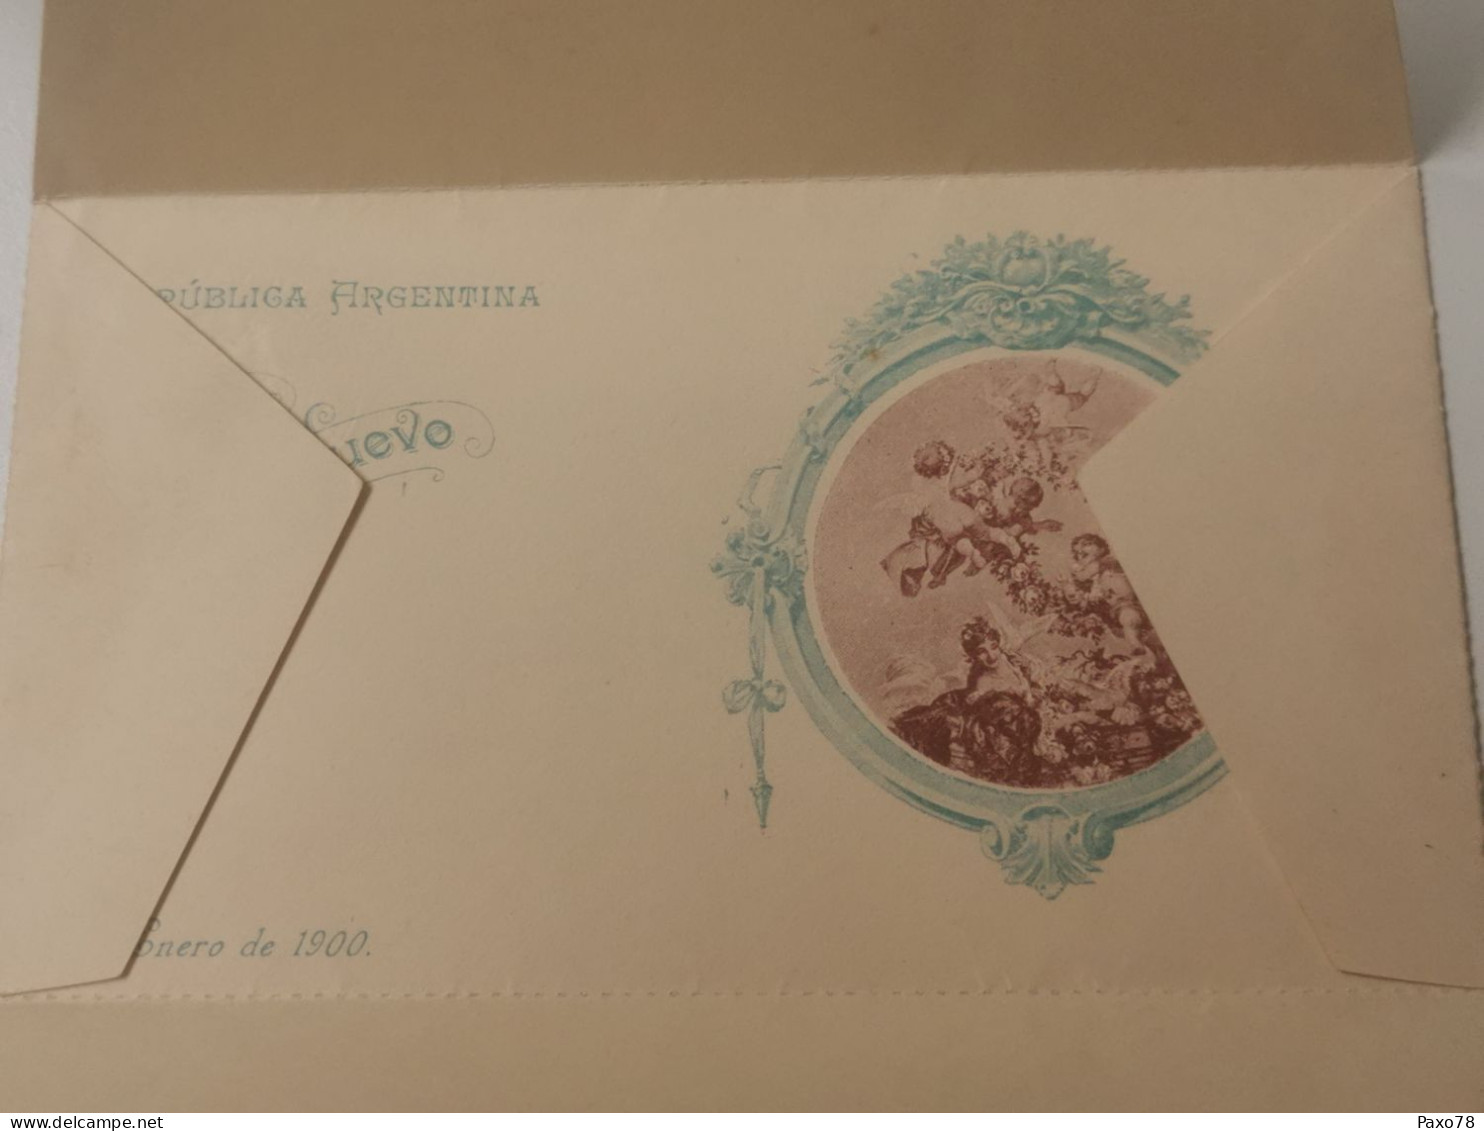 Tarjeta Postal, 5 Centavos Vierge - Enteros Postales